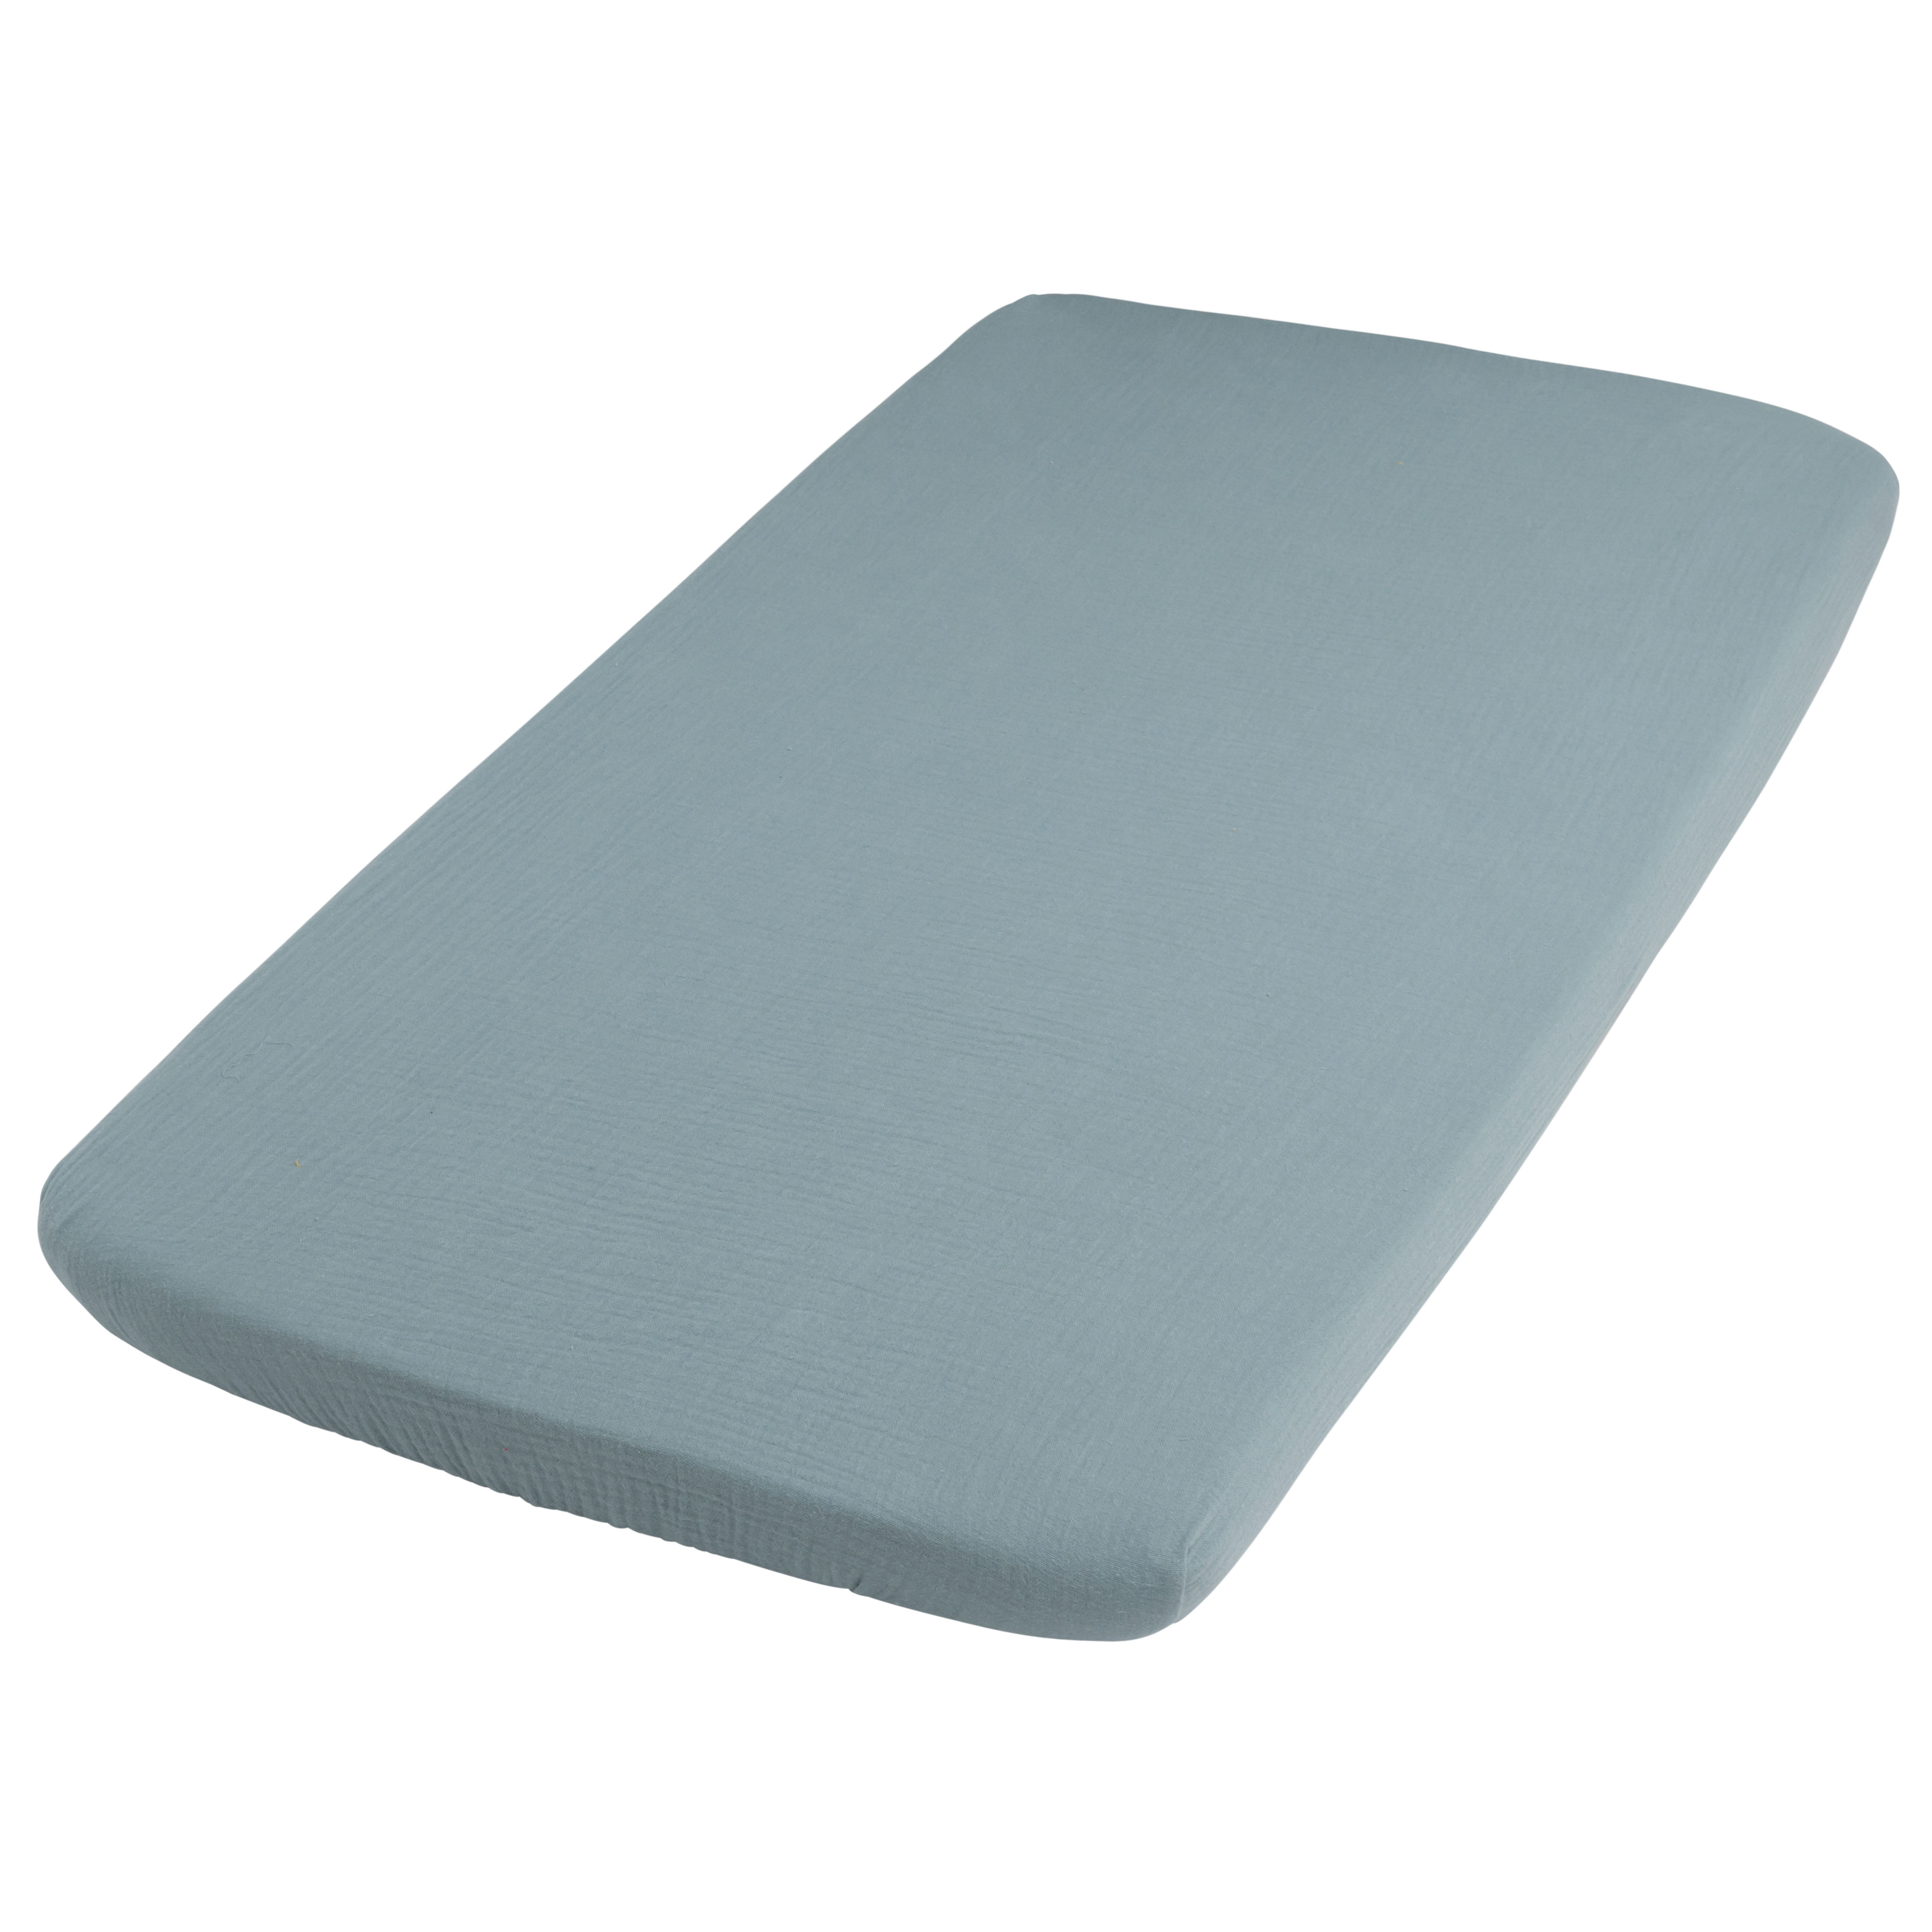 Fitted sheet Breeze stonegreen - 60x120